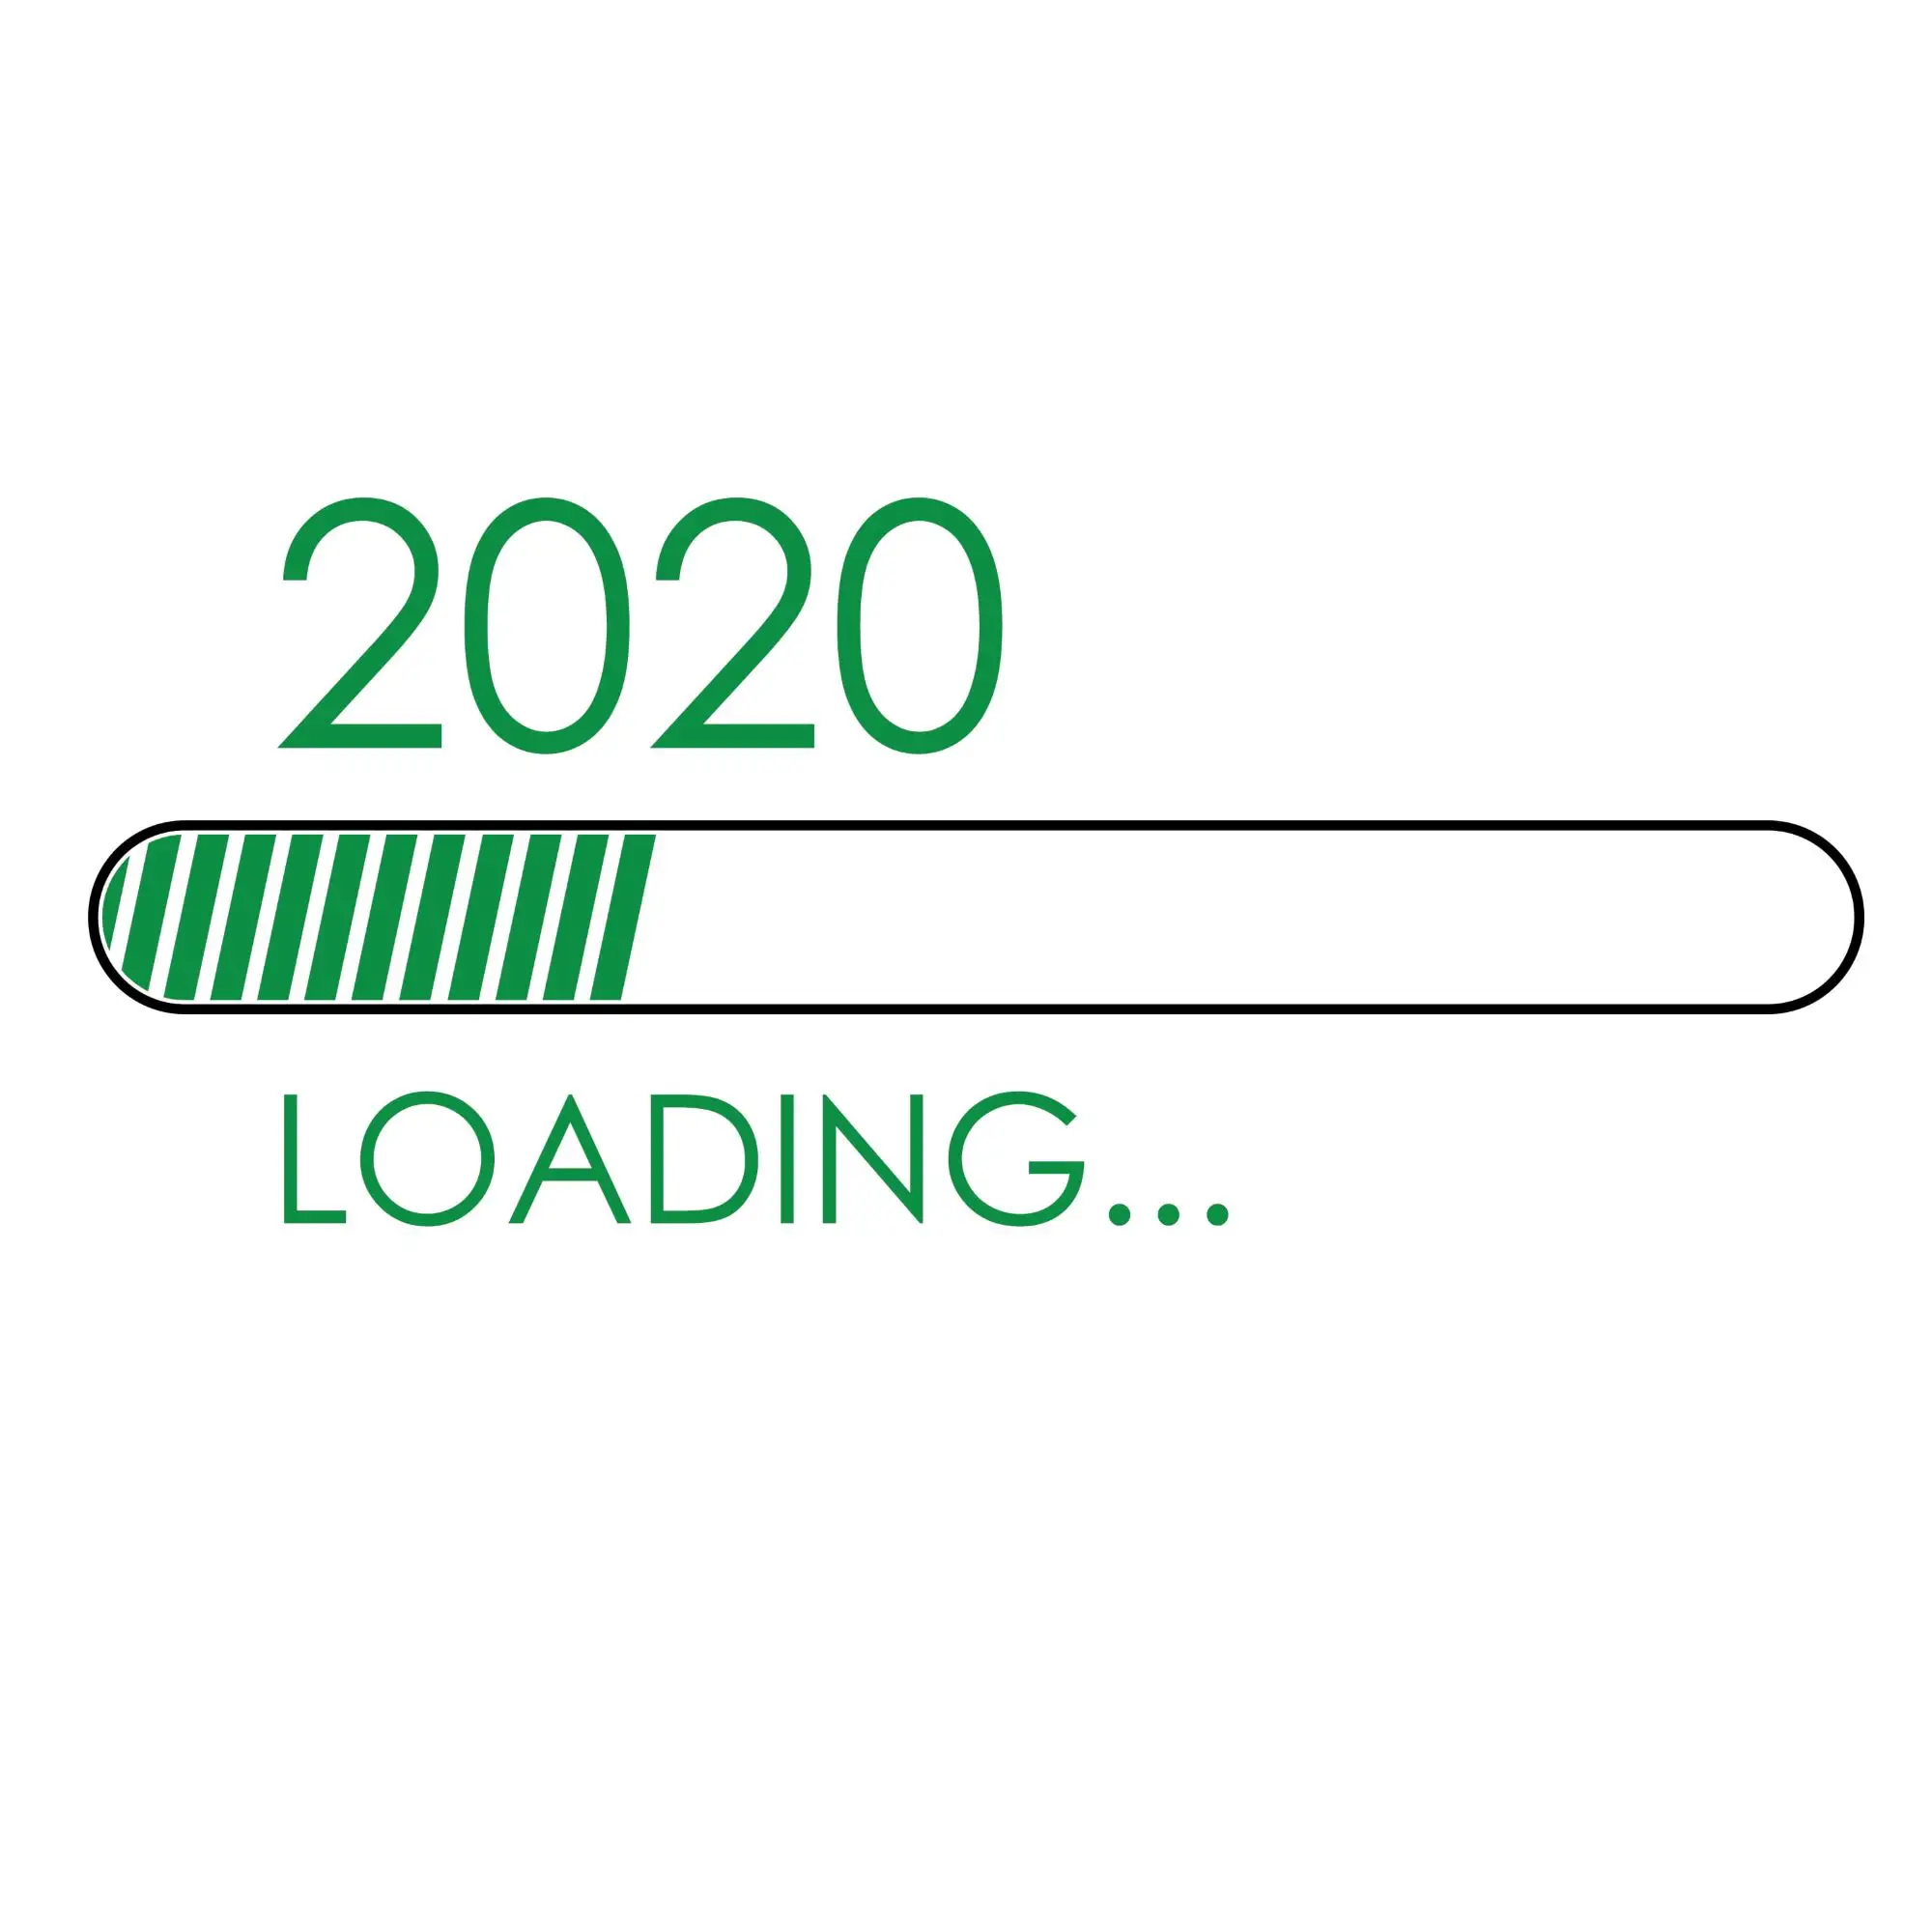 2020 Loading